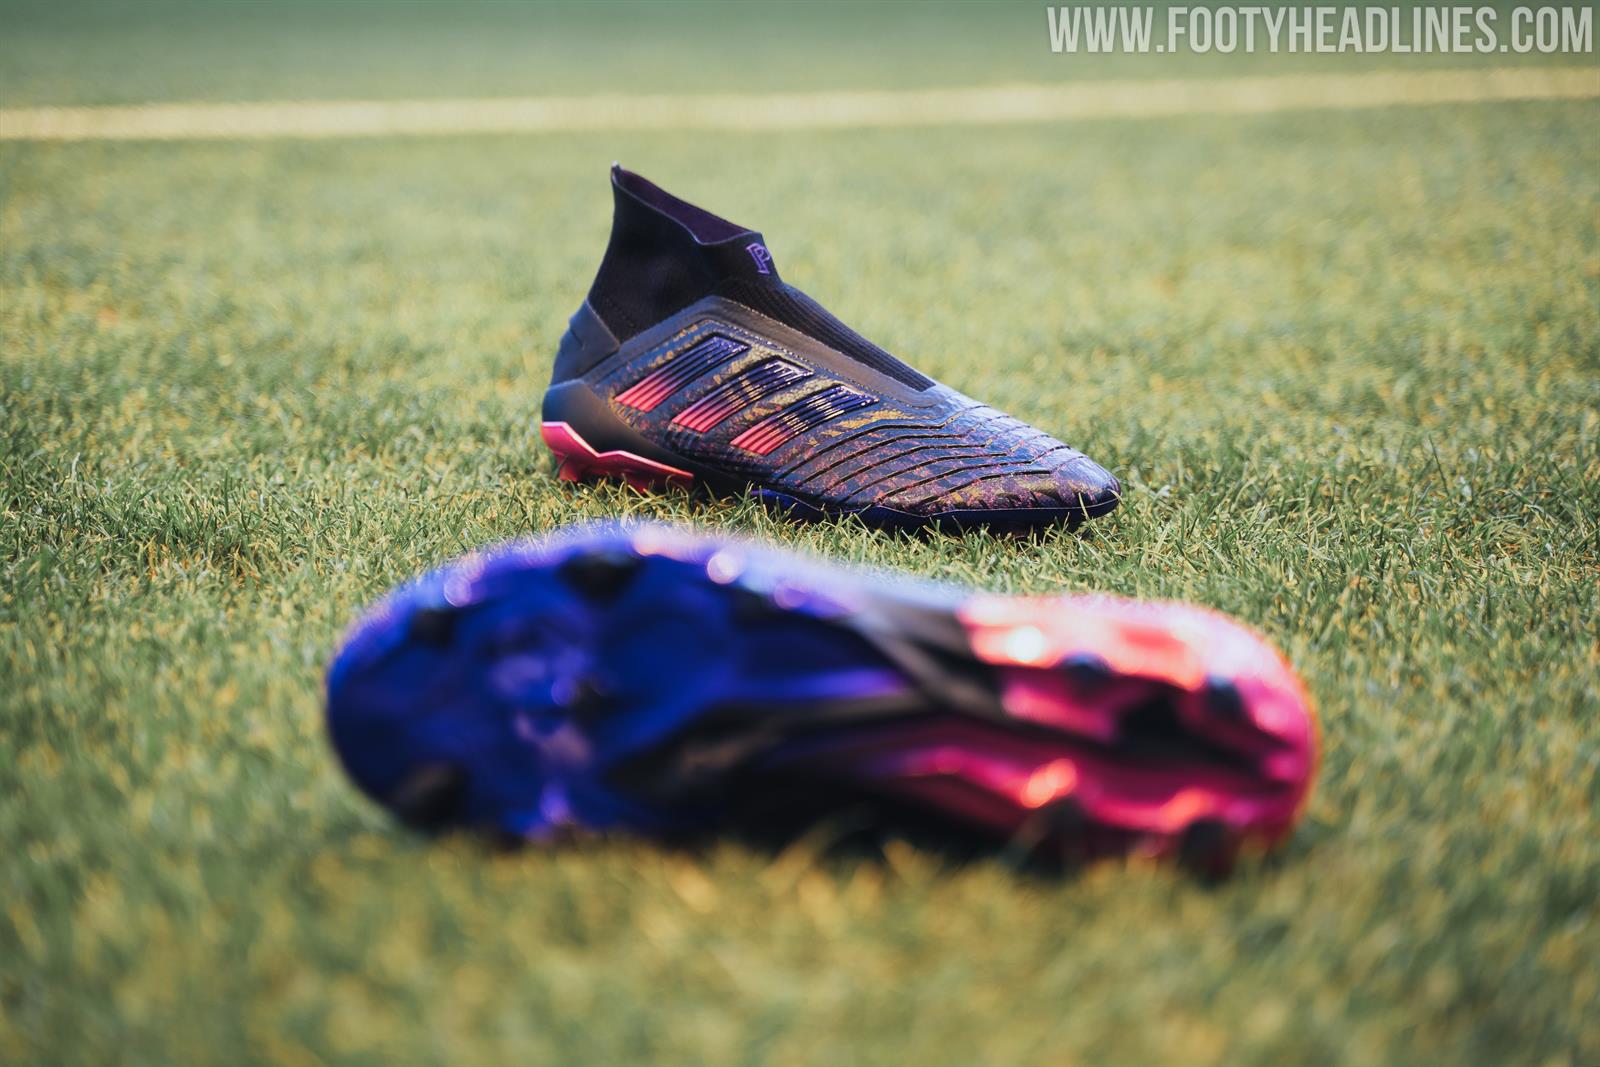 Adidas Predator 19+ Paul Pogba Season 6 Boots Released - Footy Headlines